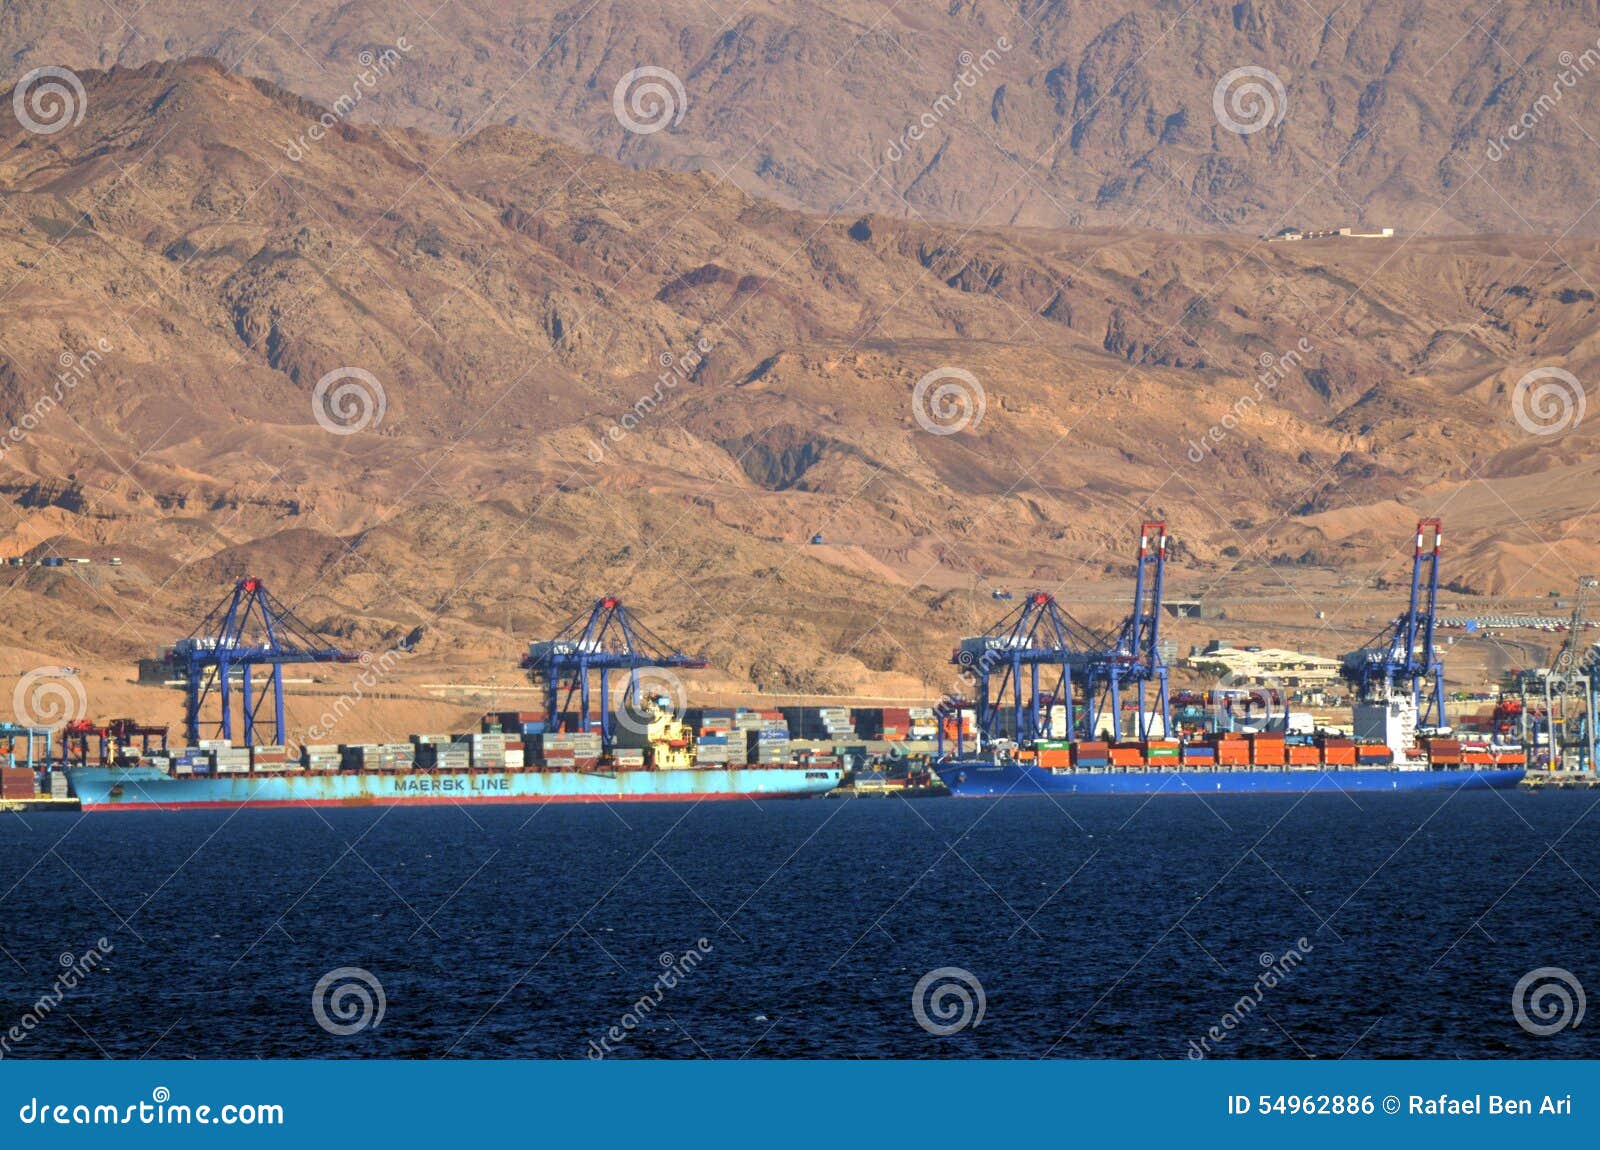 Port of in Aqaba, Jordan Editorial Photo - Image of logistic, moored: